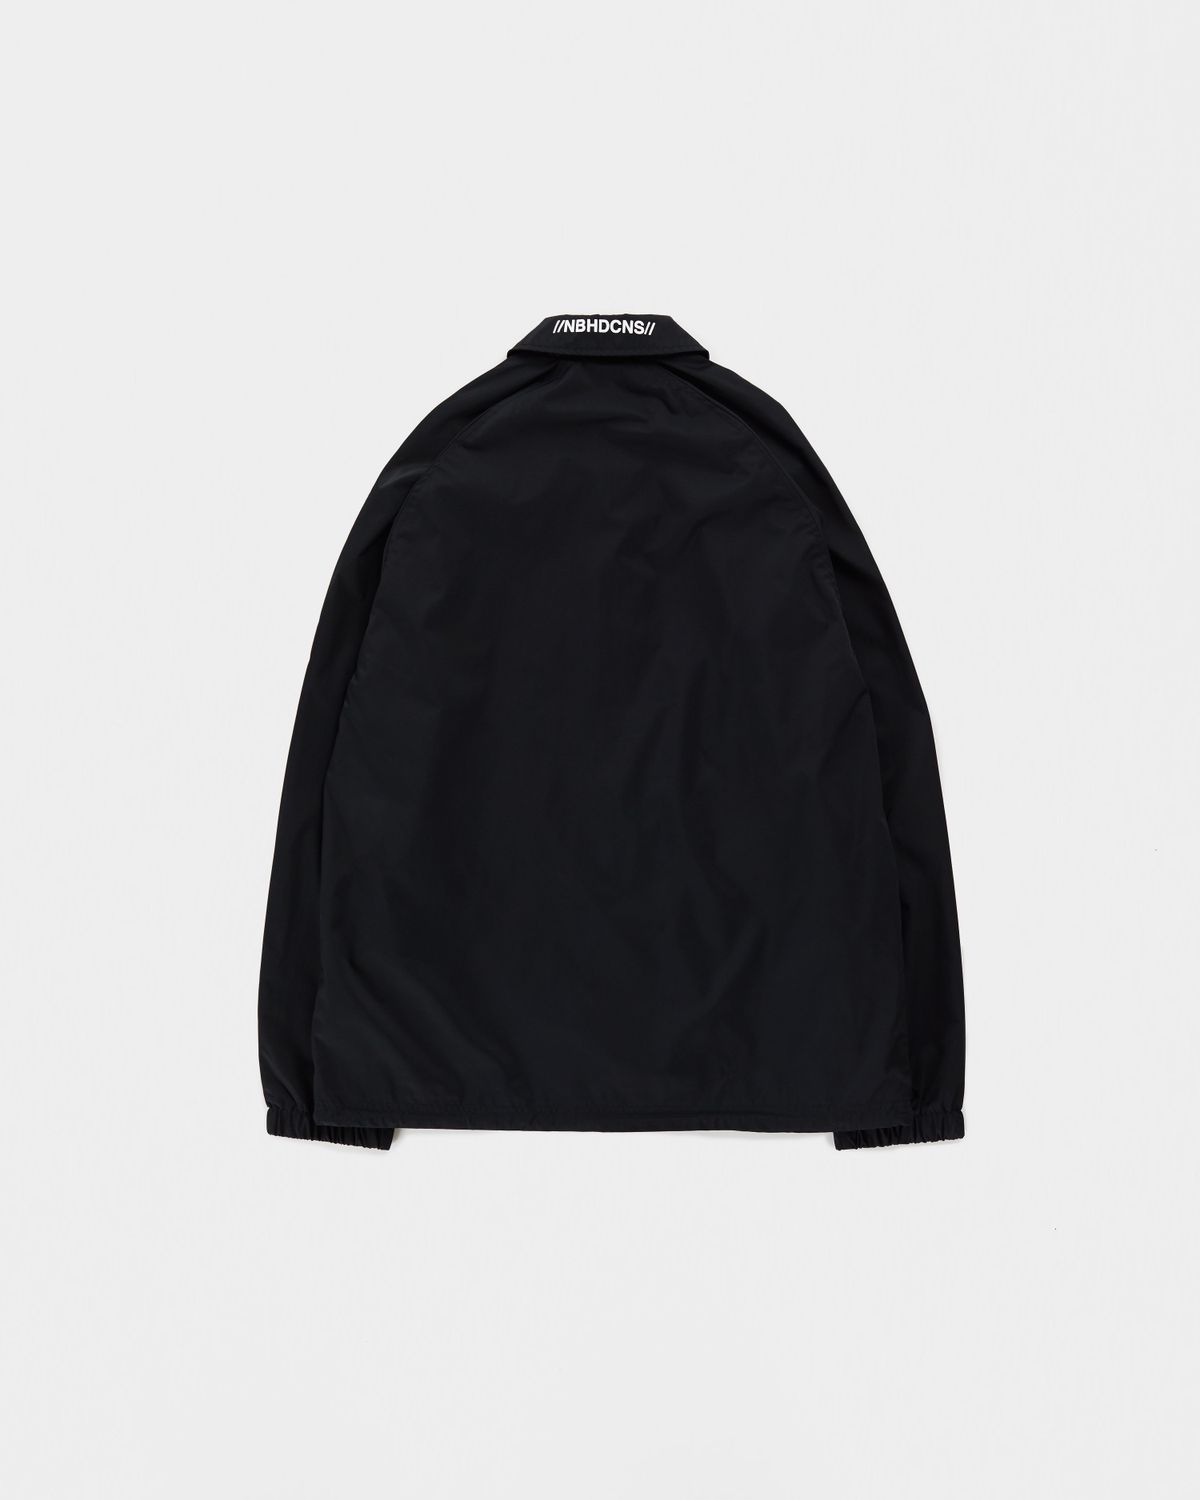 Converse x NBHD – Black Coaches Jacket - Outerwear - Black - Image 2